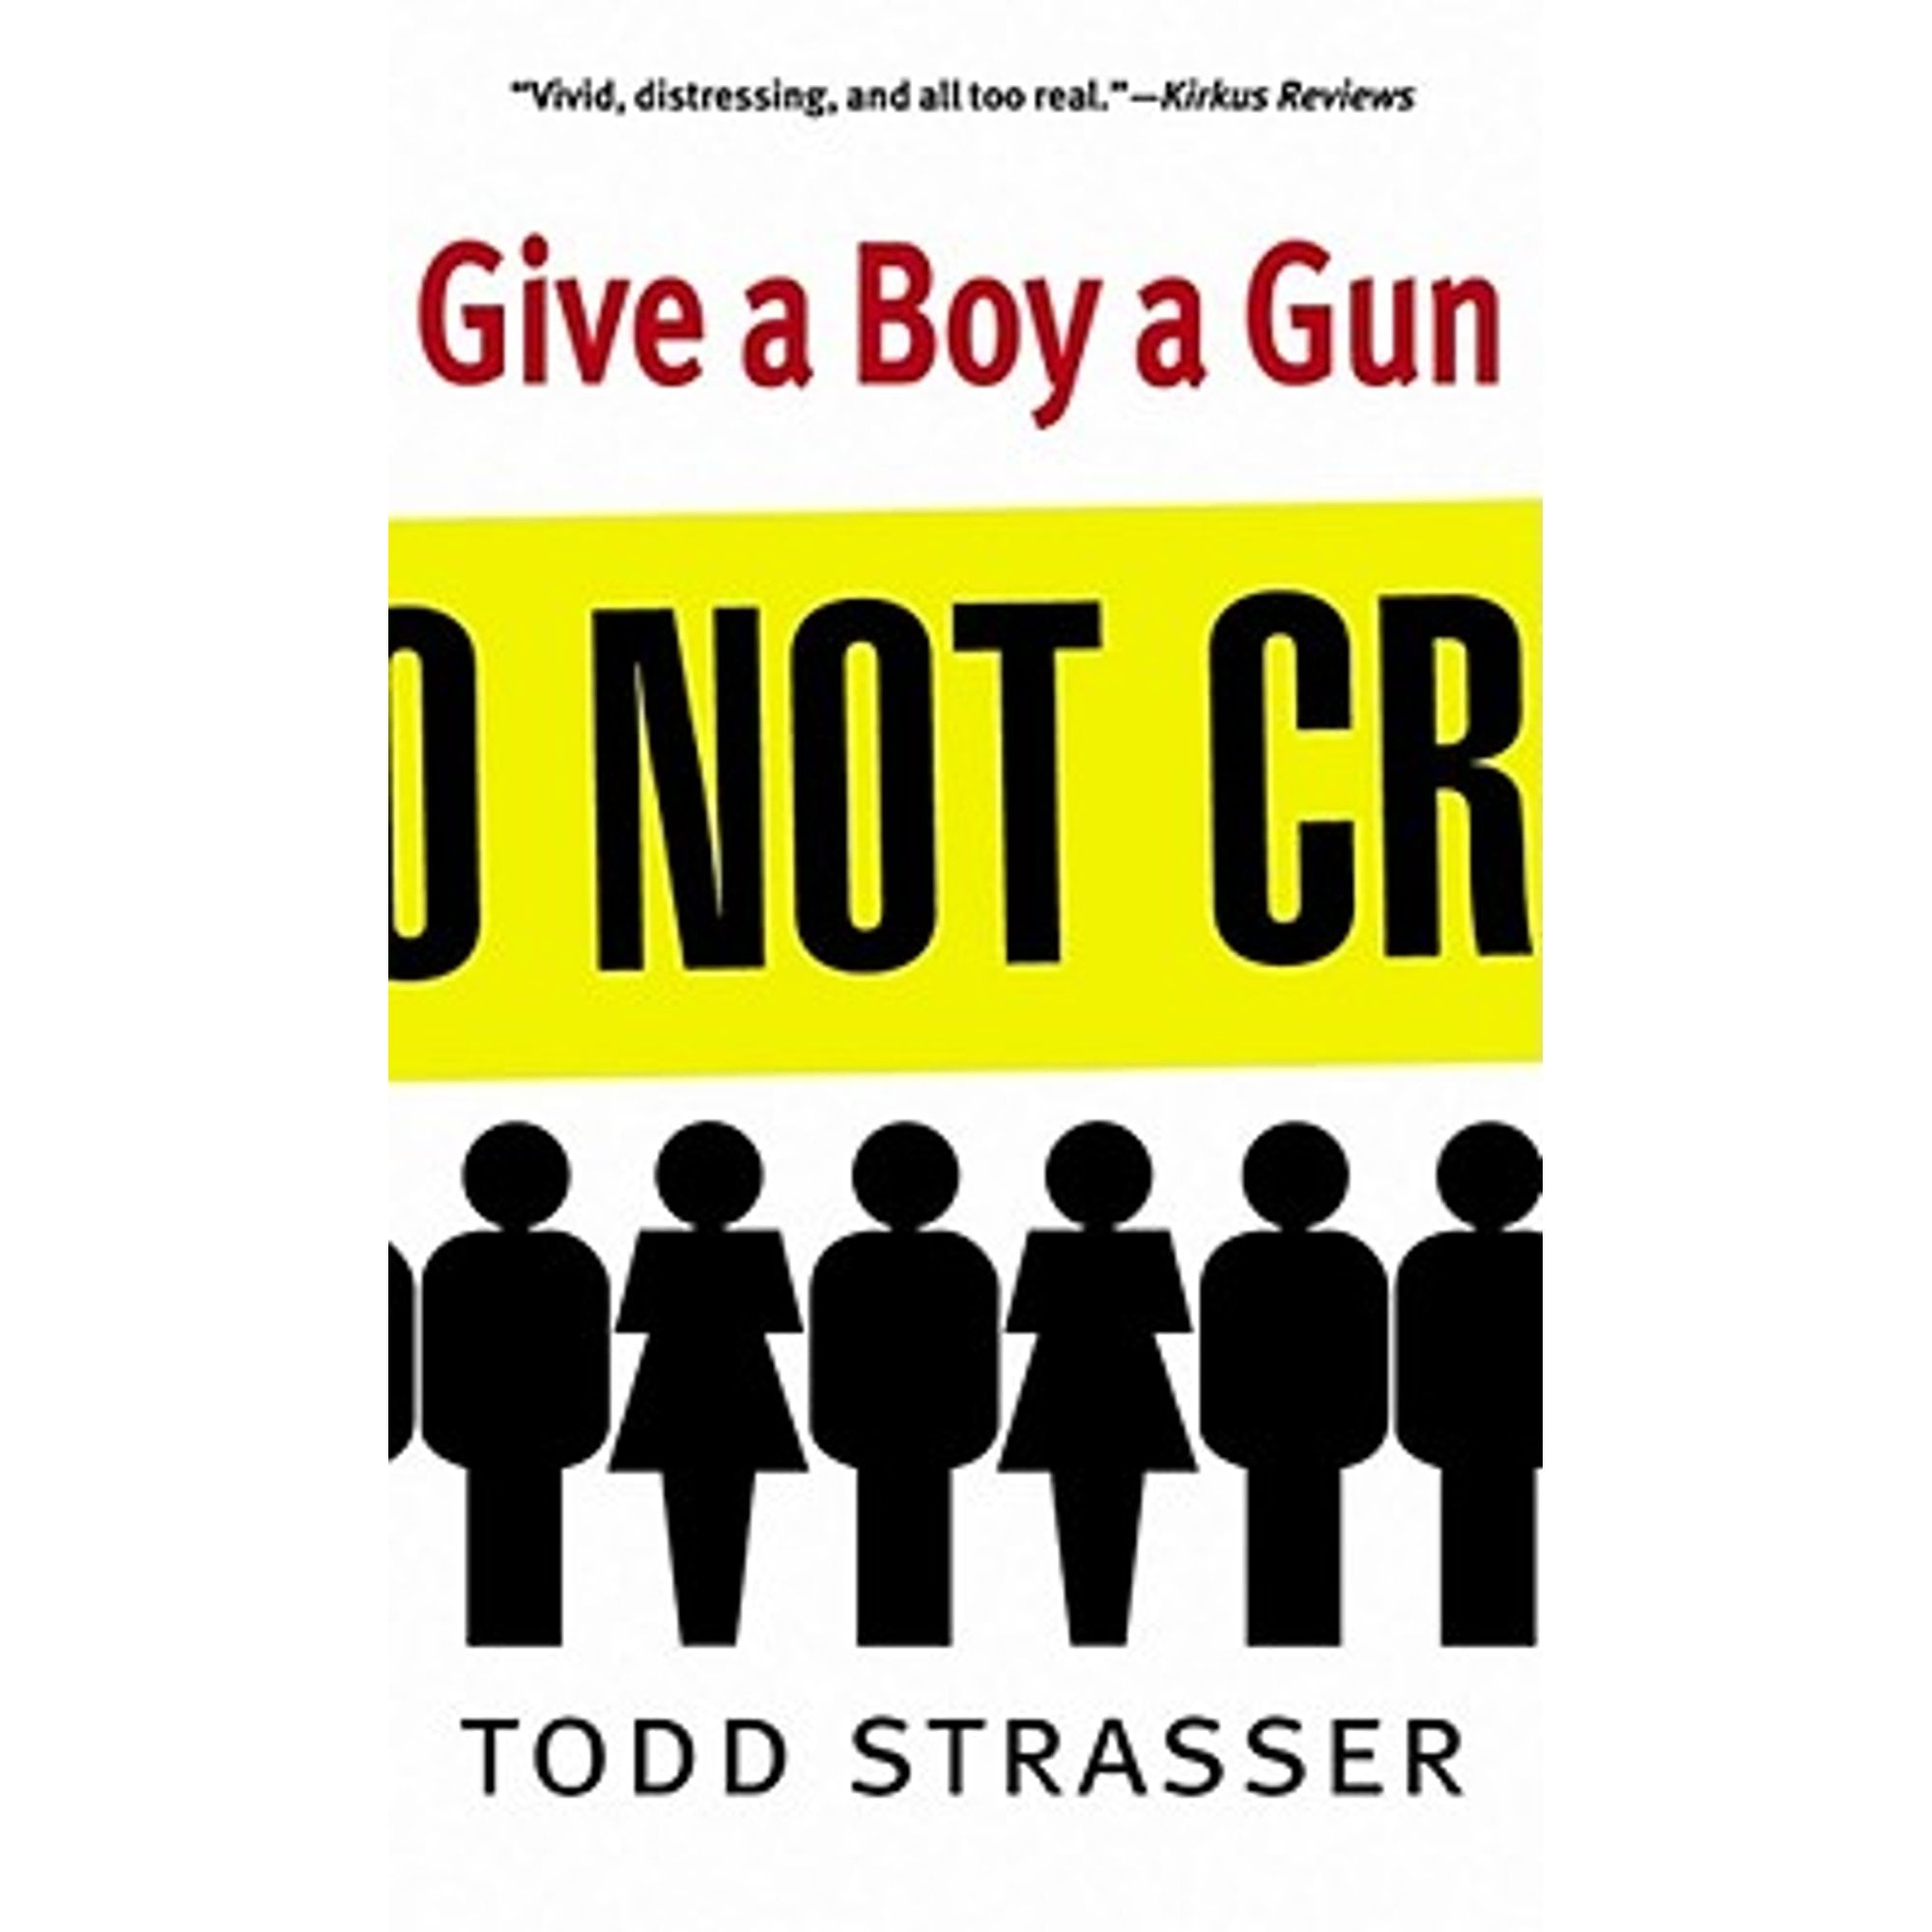 give a boy a gun by todd strasser summary